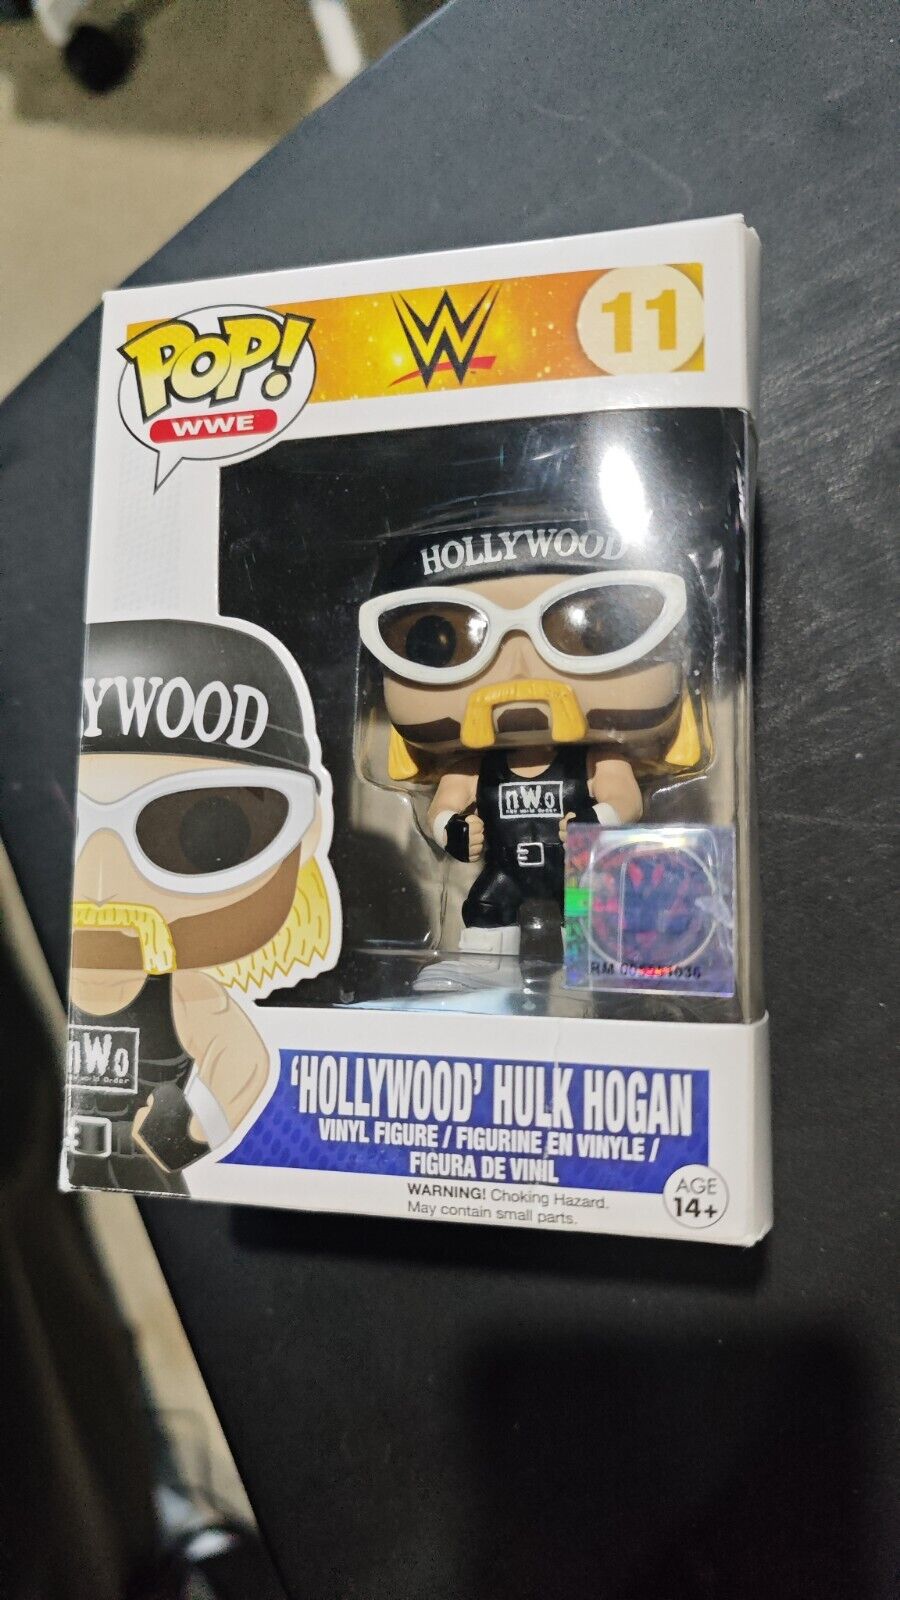 Hollywood Hulk Hogan Funko Pop WWE NWO UNOPENED 2K15 Collector’s Exclusive